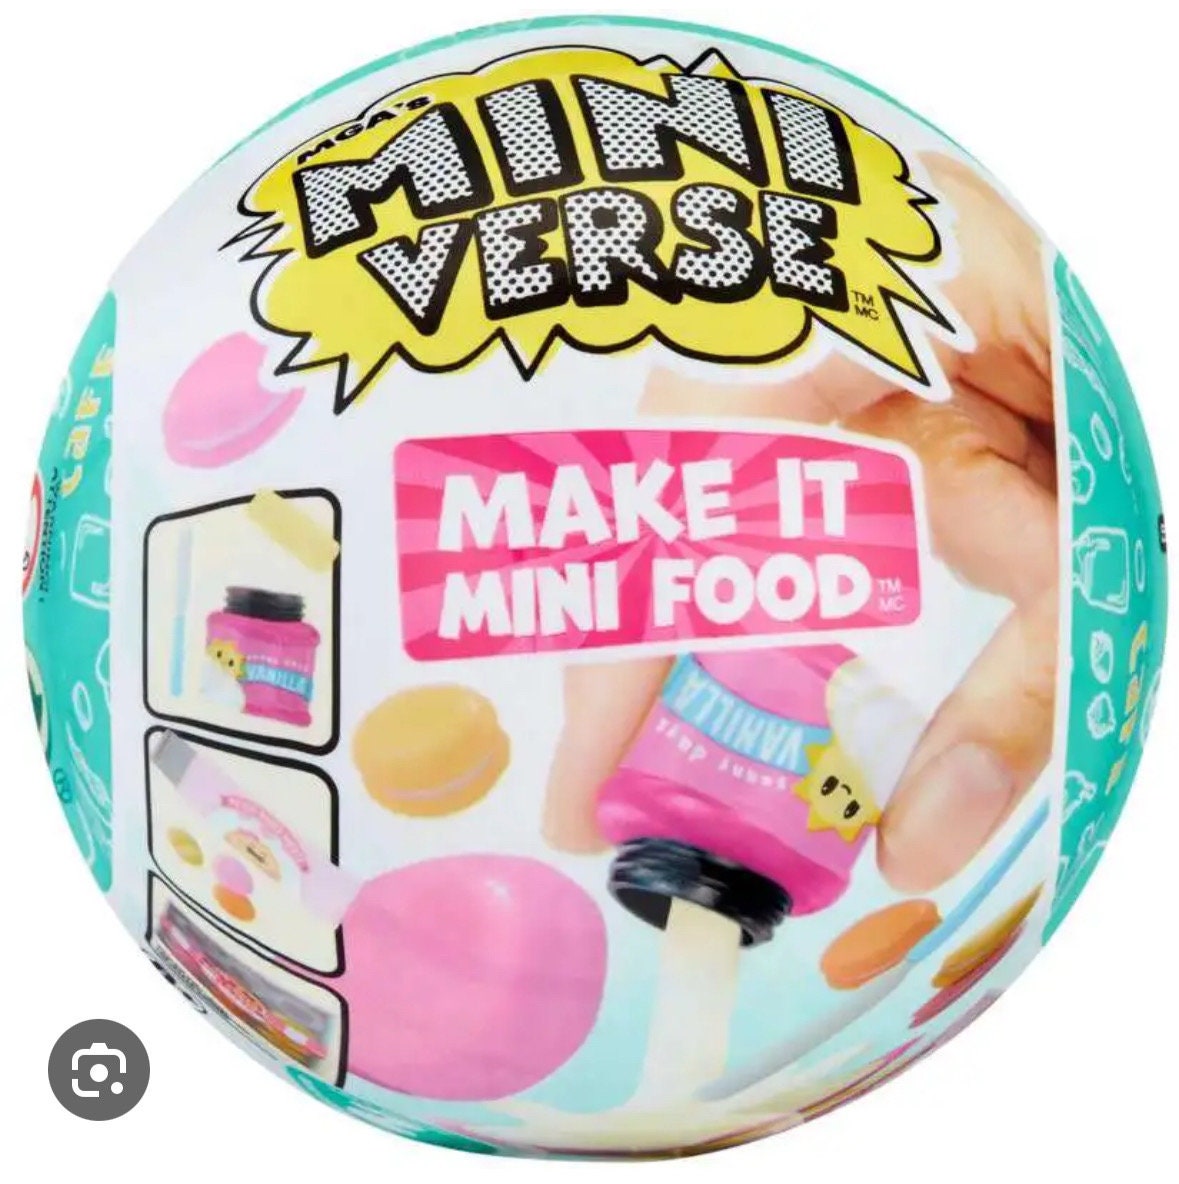 NEW miniverse make it mini food limited edition ELF holiday full